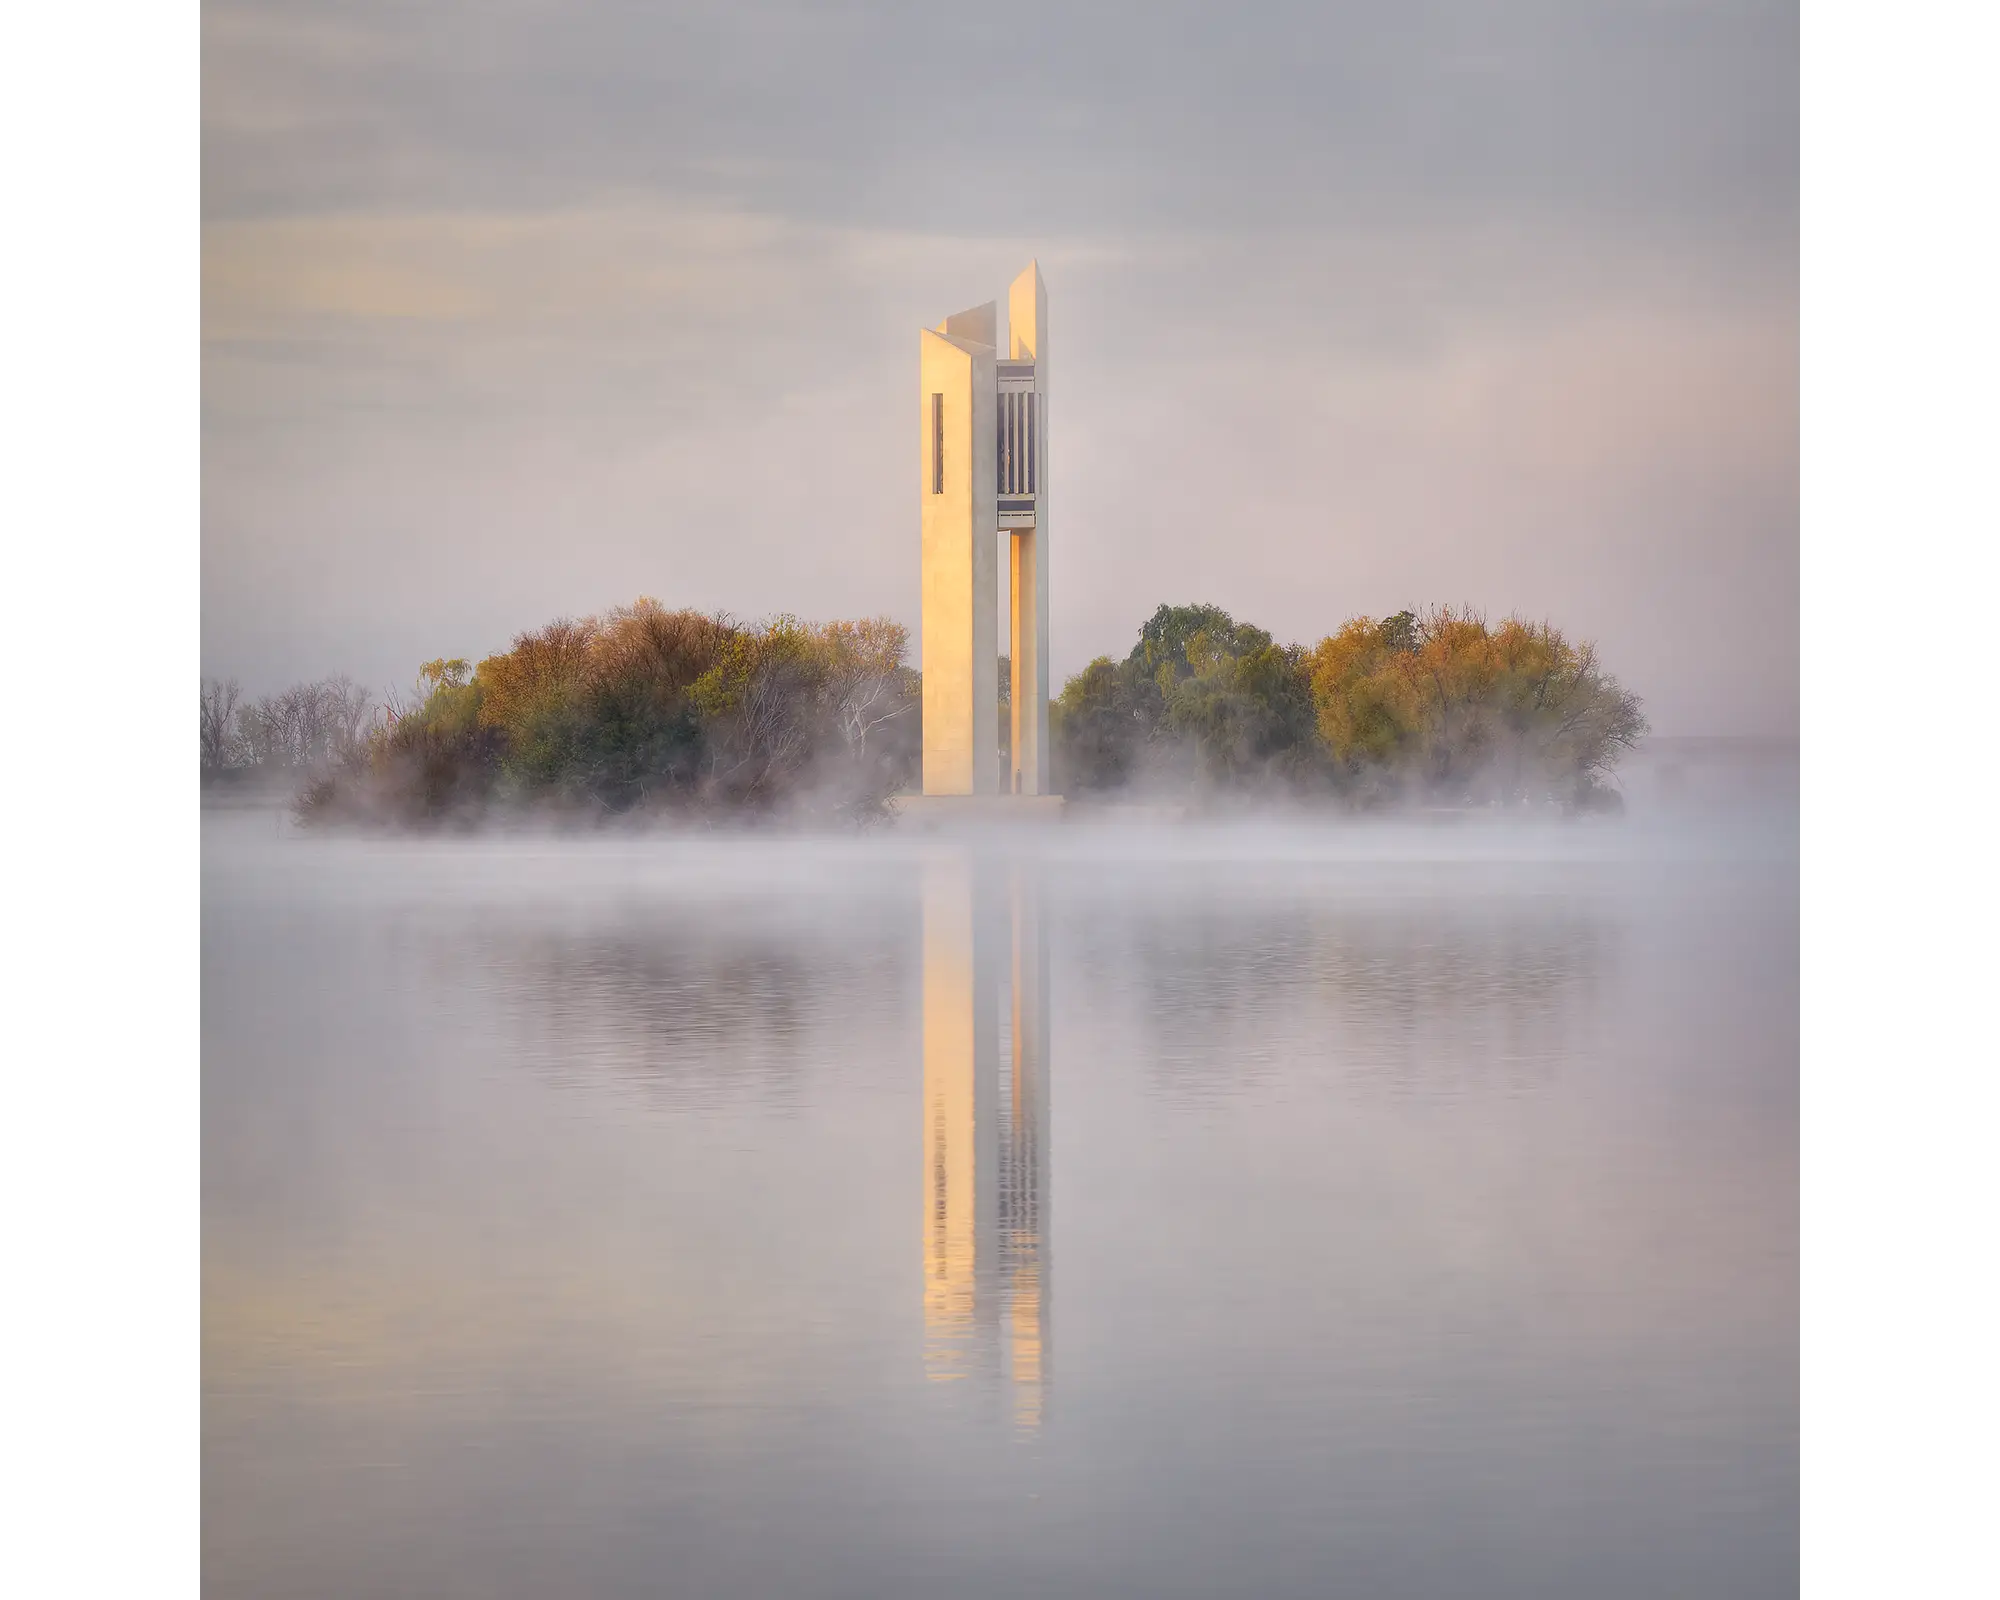 Morning Fog - National Carillon at sunrise, Lake Burley Griffin, Canberra.